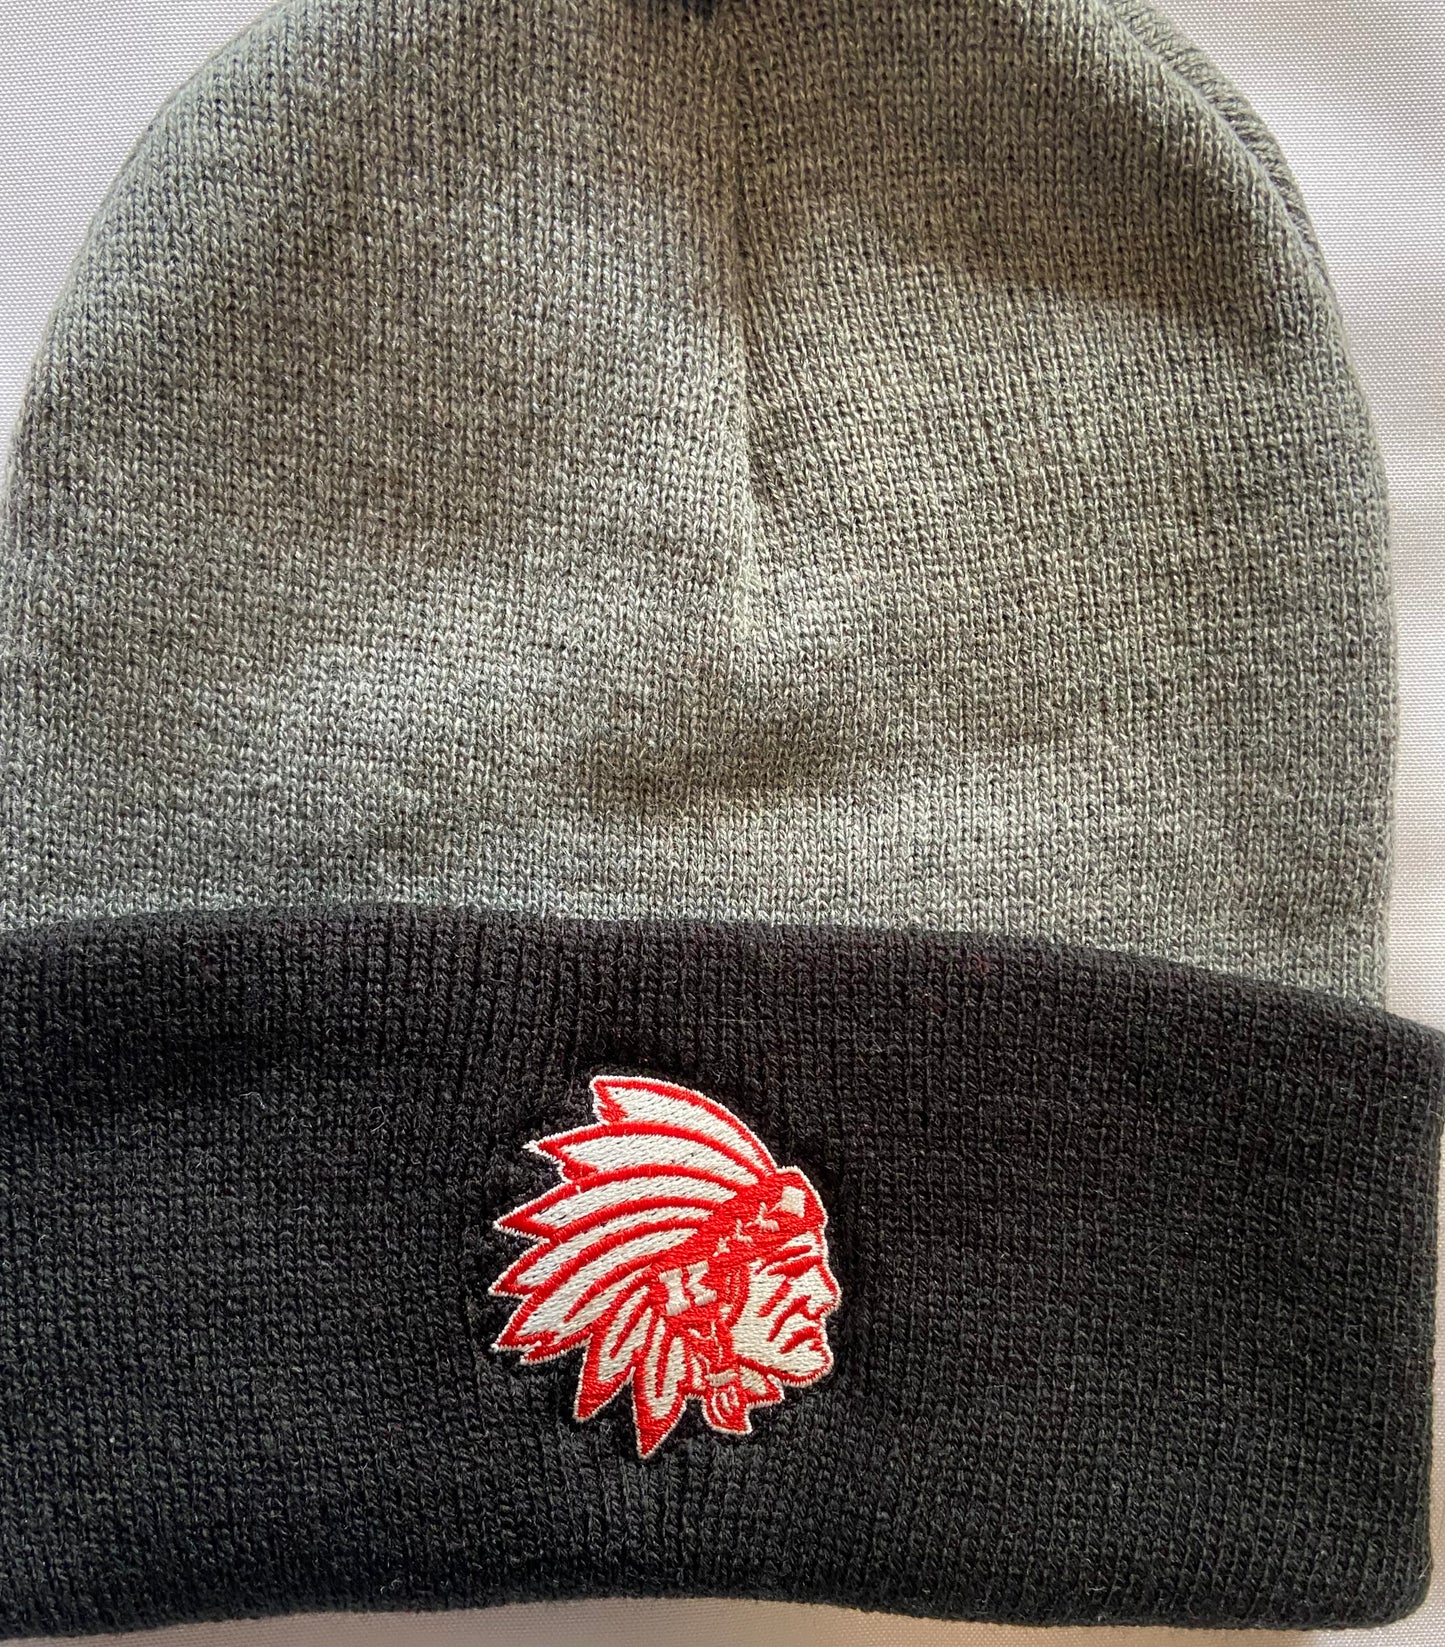 Knox Redskins Embroidered Logo Beanies Winter Pom Pom Hats - 3 styles Red Black Grey